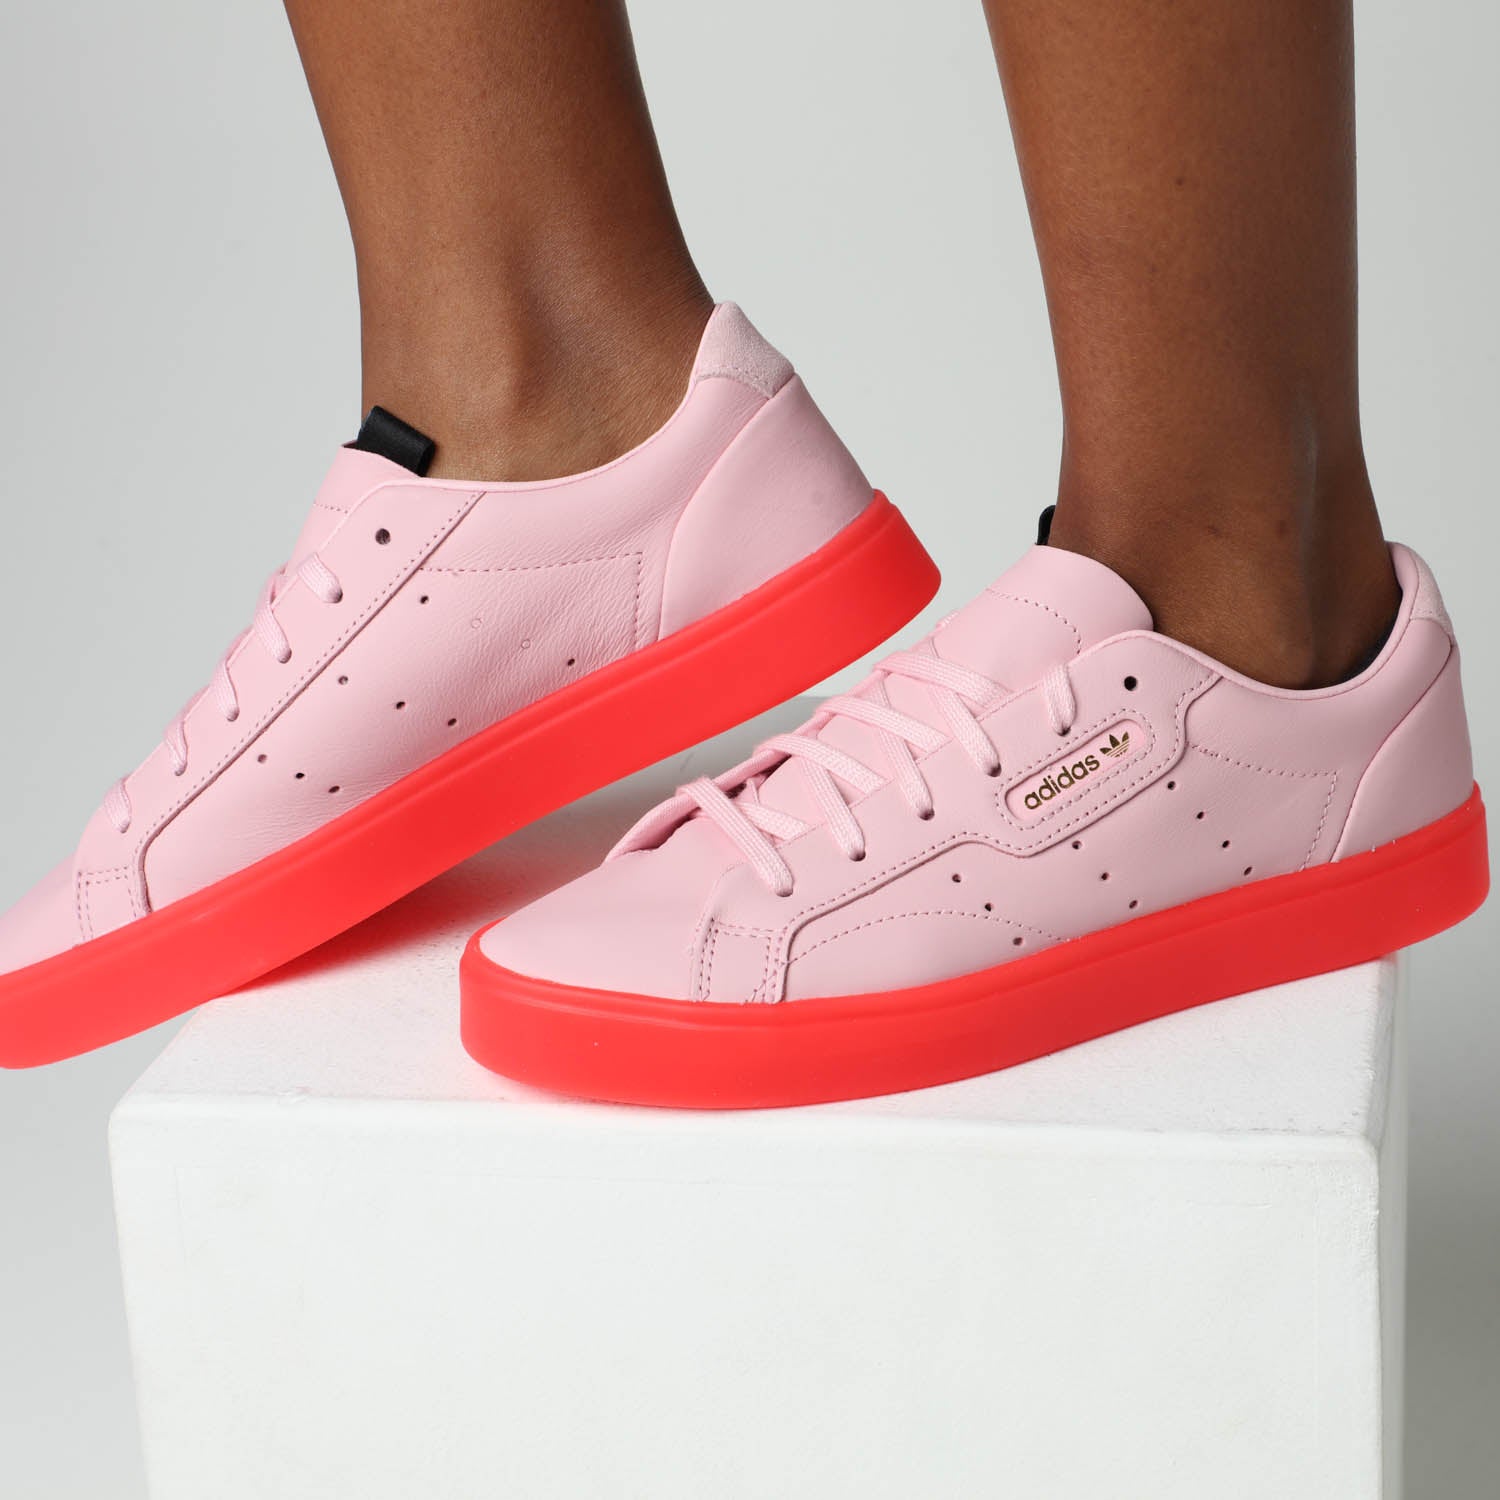 adidas pink red